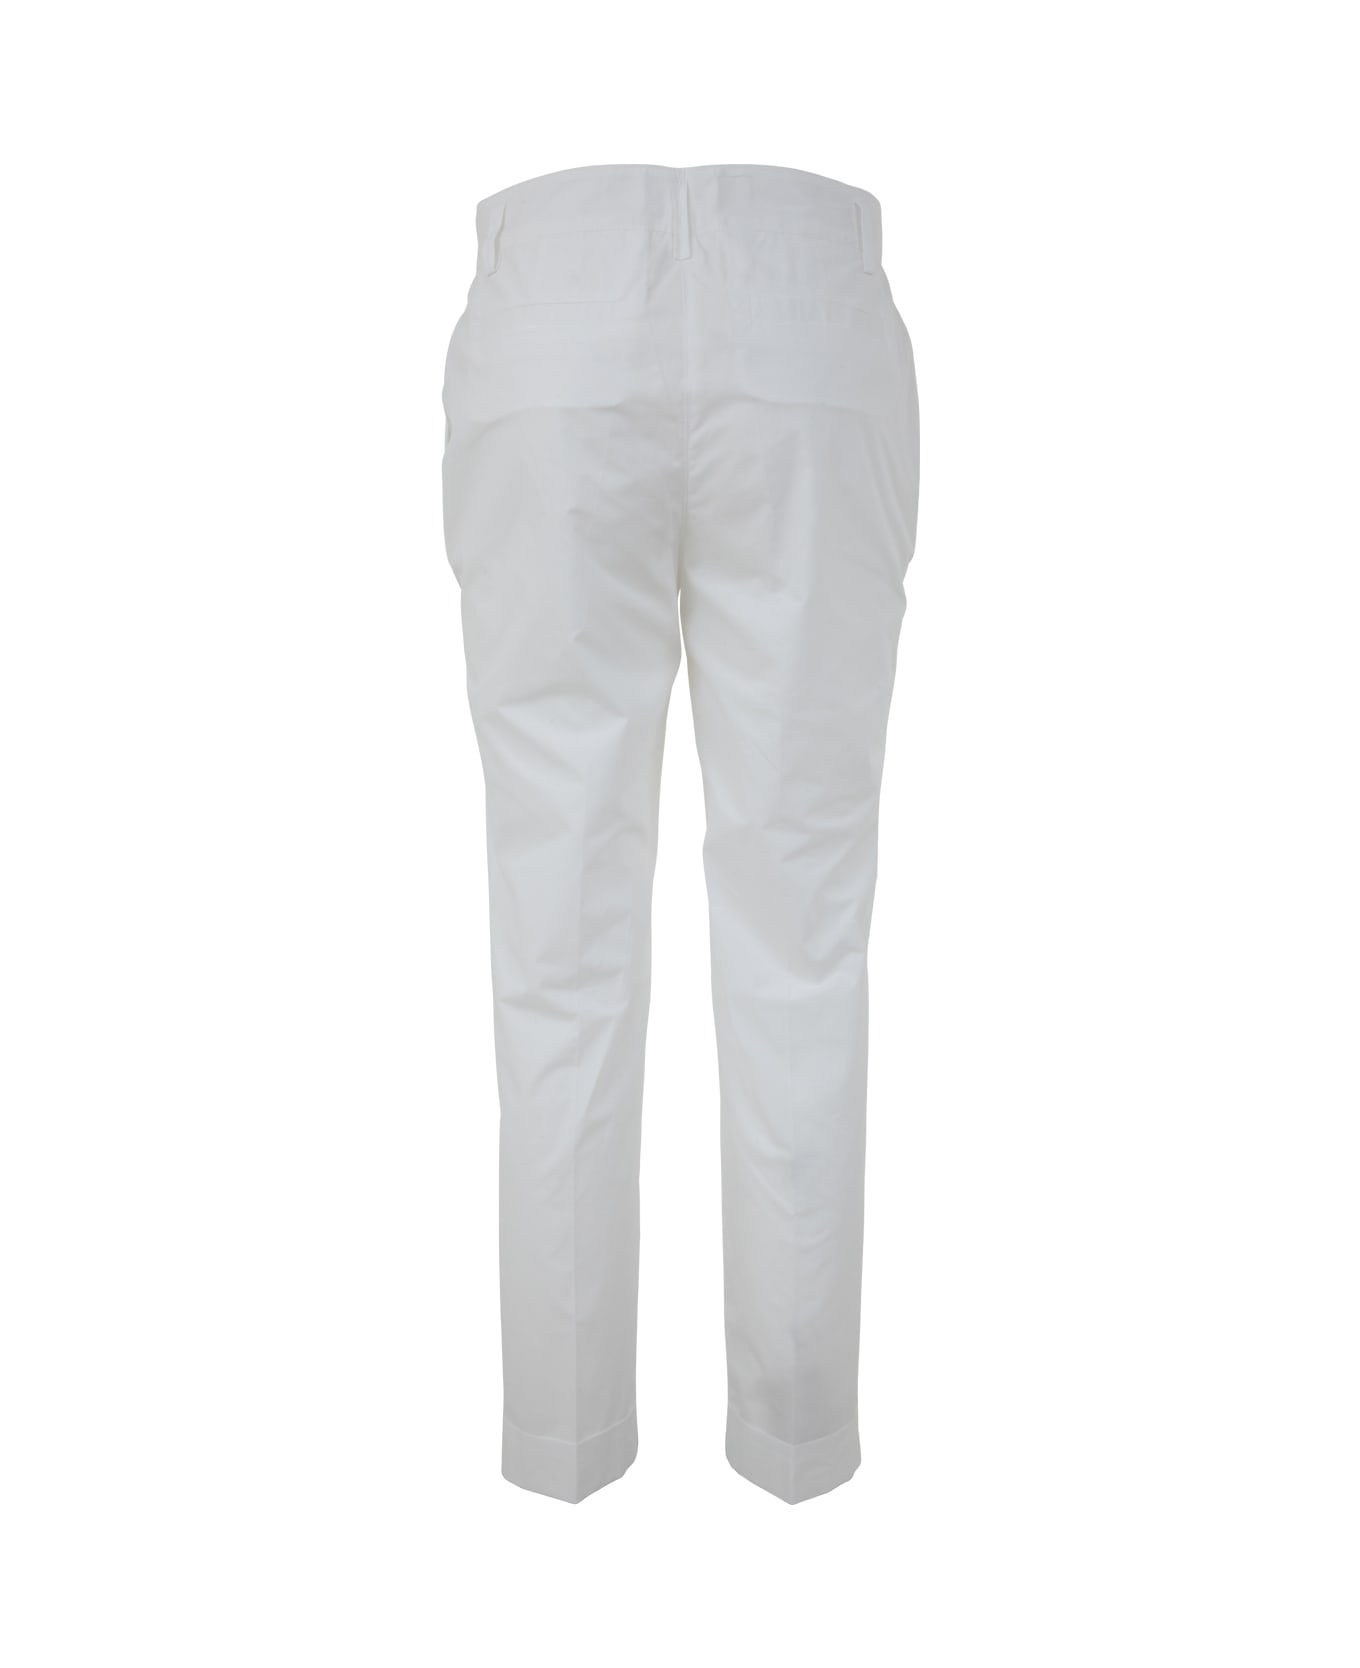 Parosh Plain Cotton Trousers - White